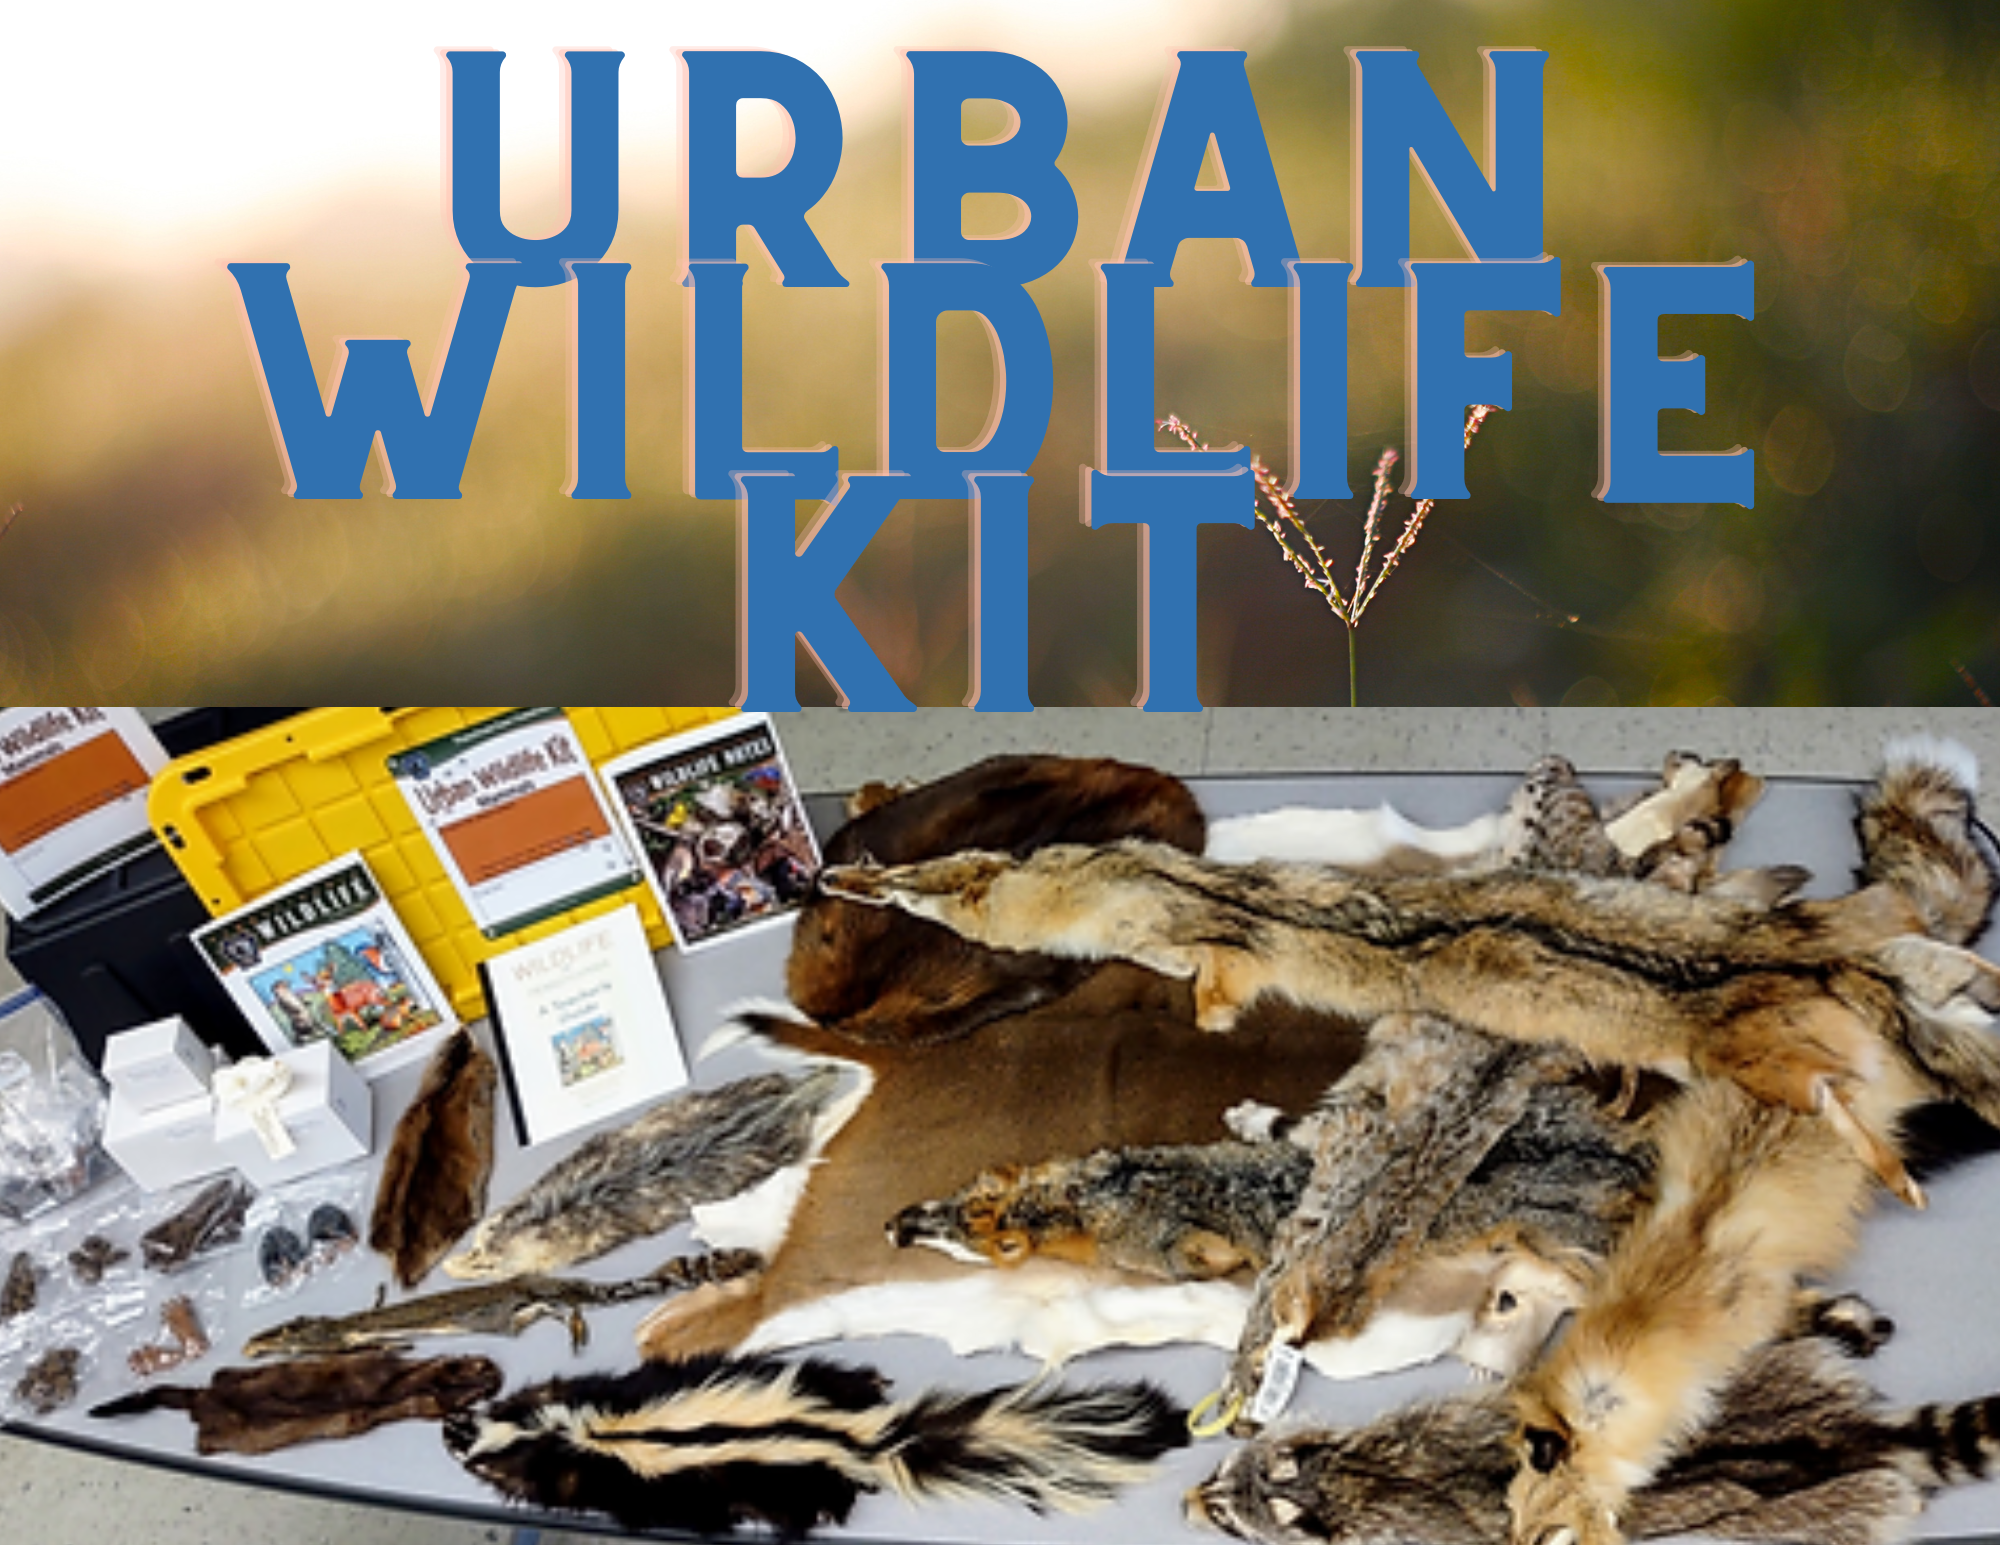 Image of the Urban Wildlife Kit